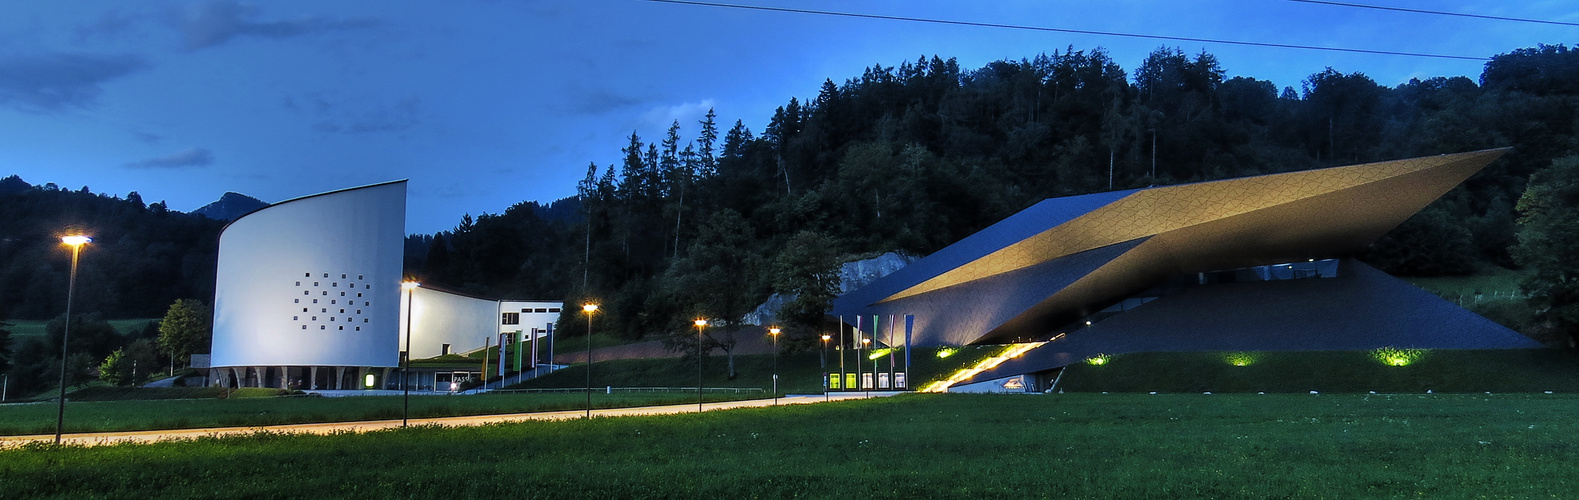 Festspielhäuser in Erl / Tirol